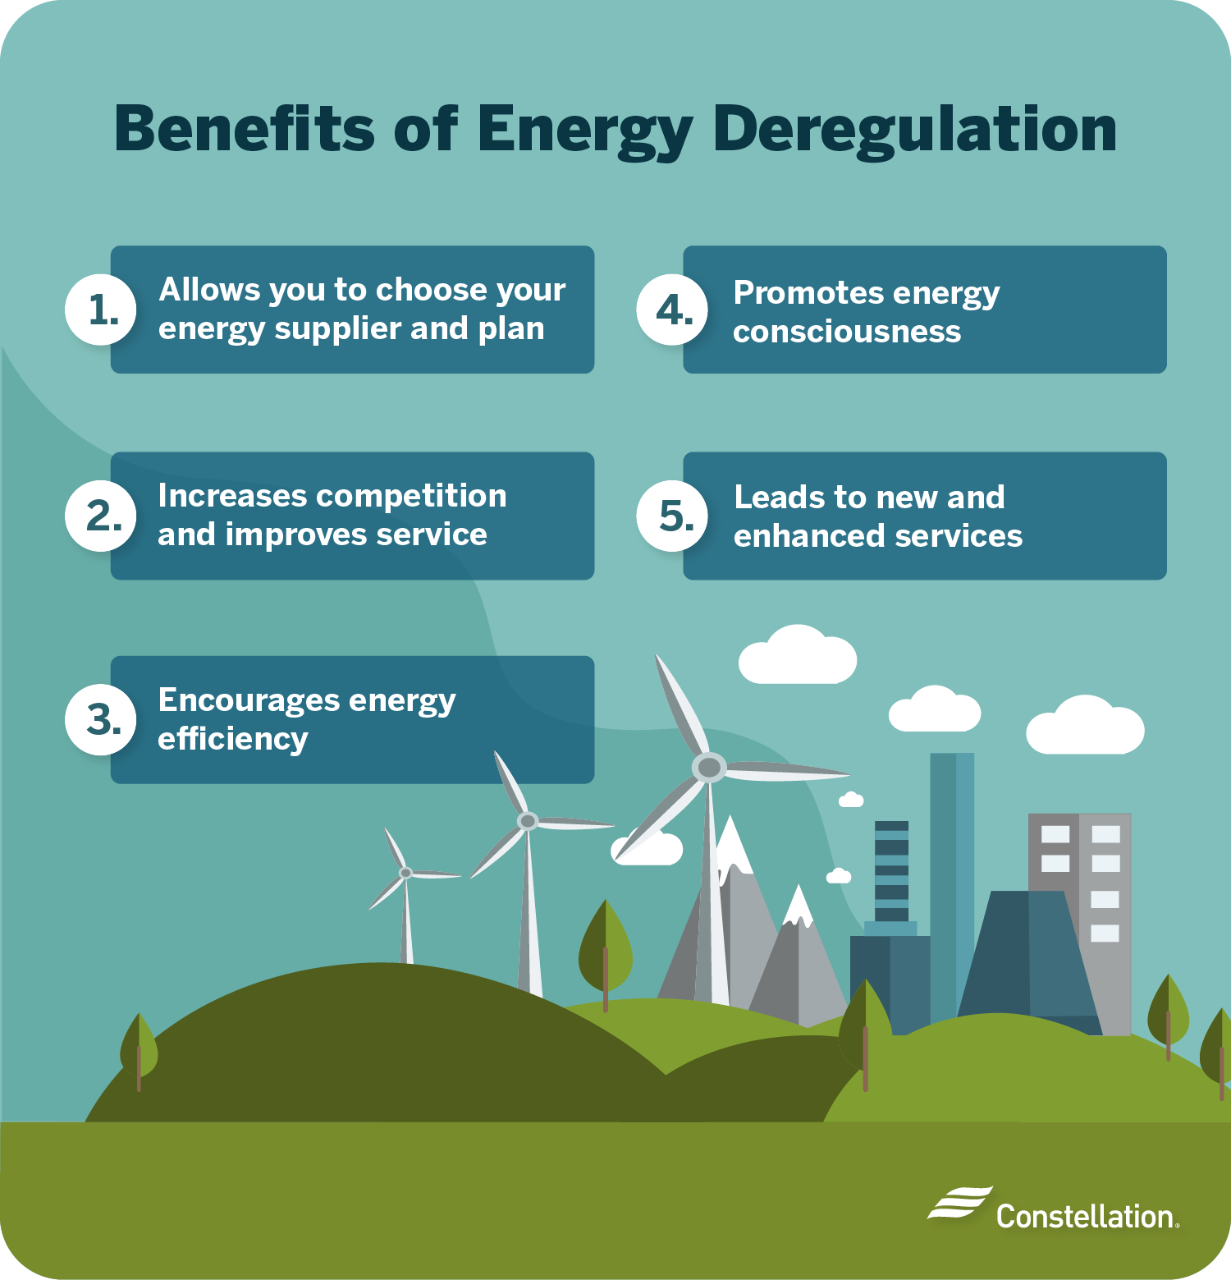 benefits of energy deregulation image